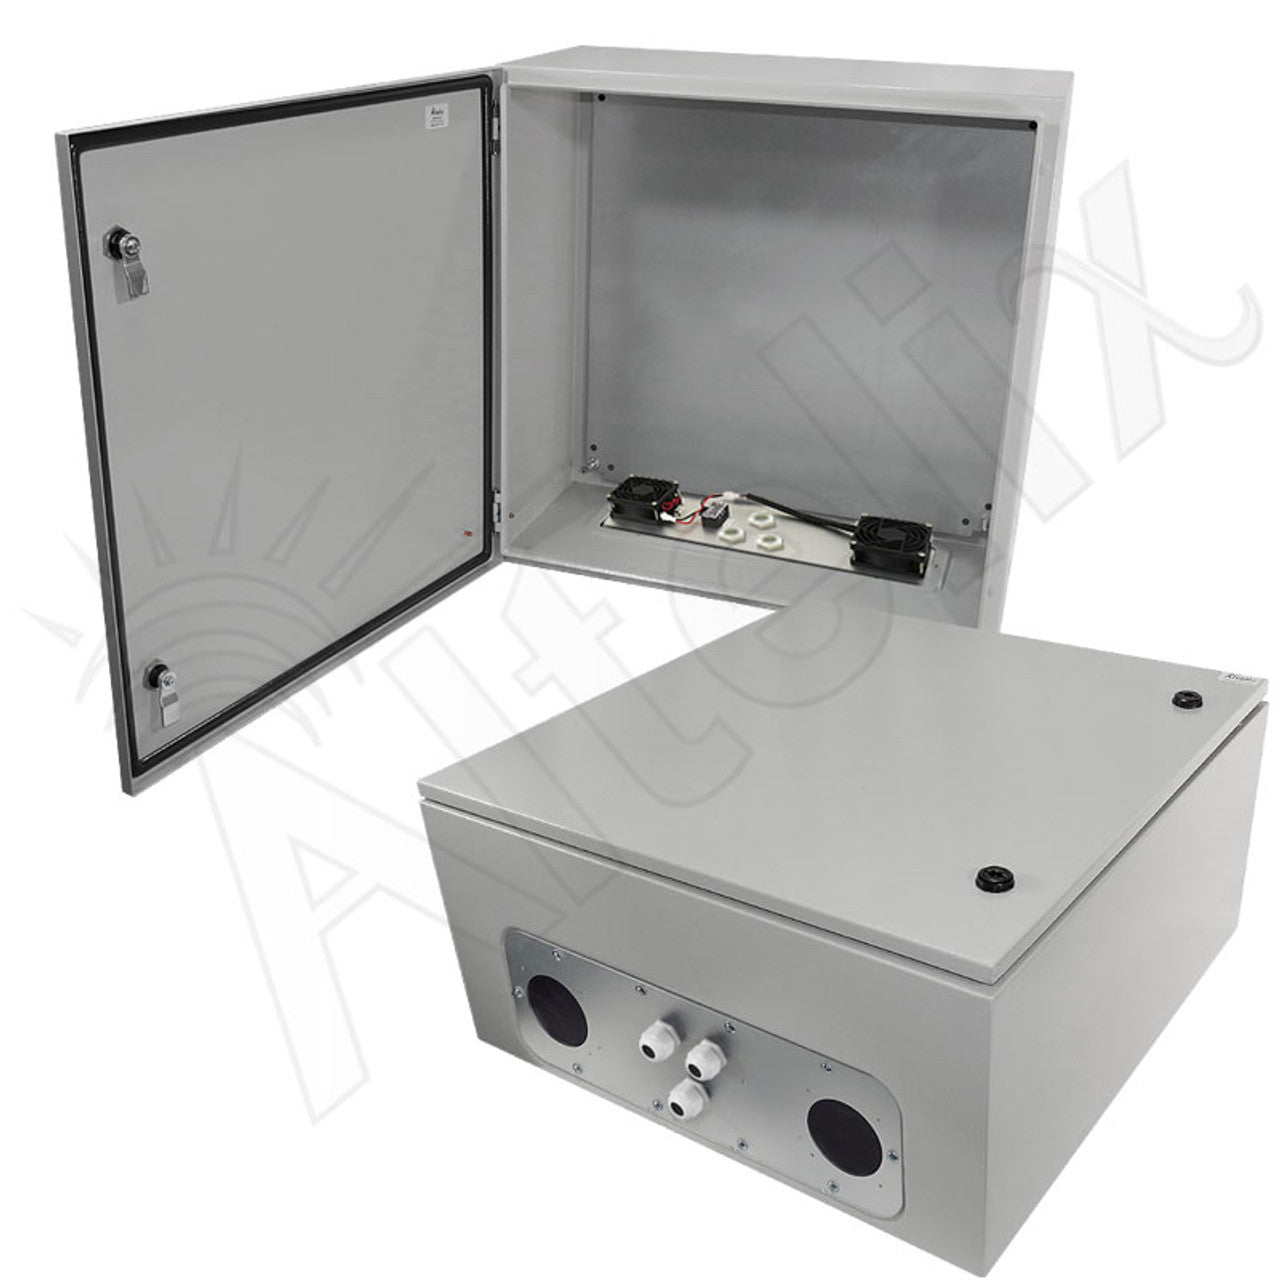 Altelix Steel Weatherproof NEMA Enclosure with Dual 24 VDC Cooling Fans